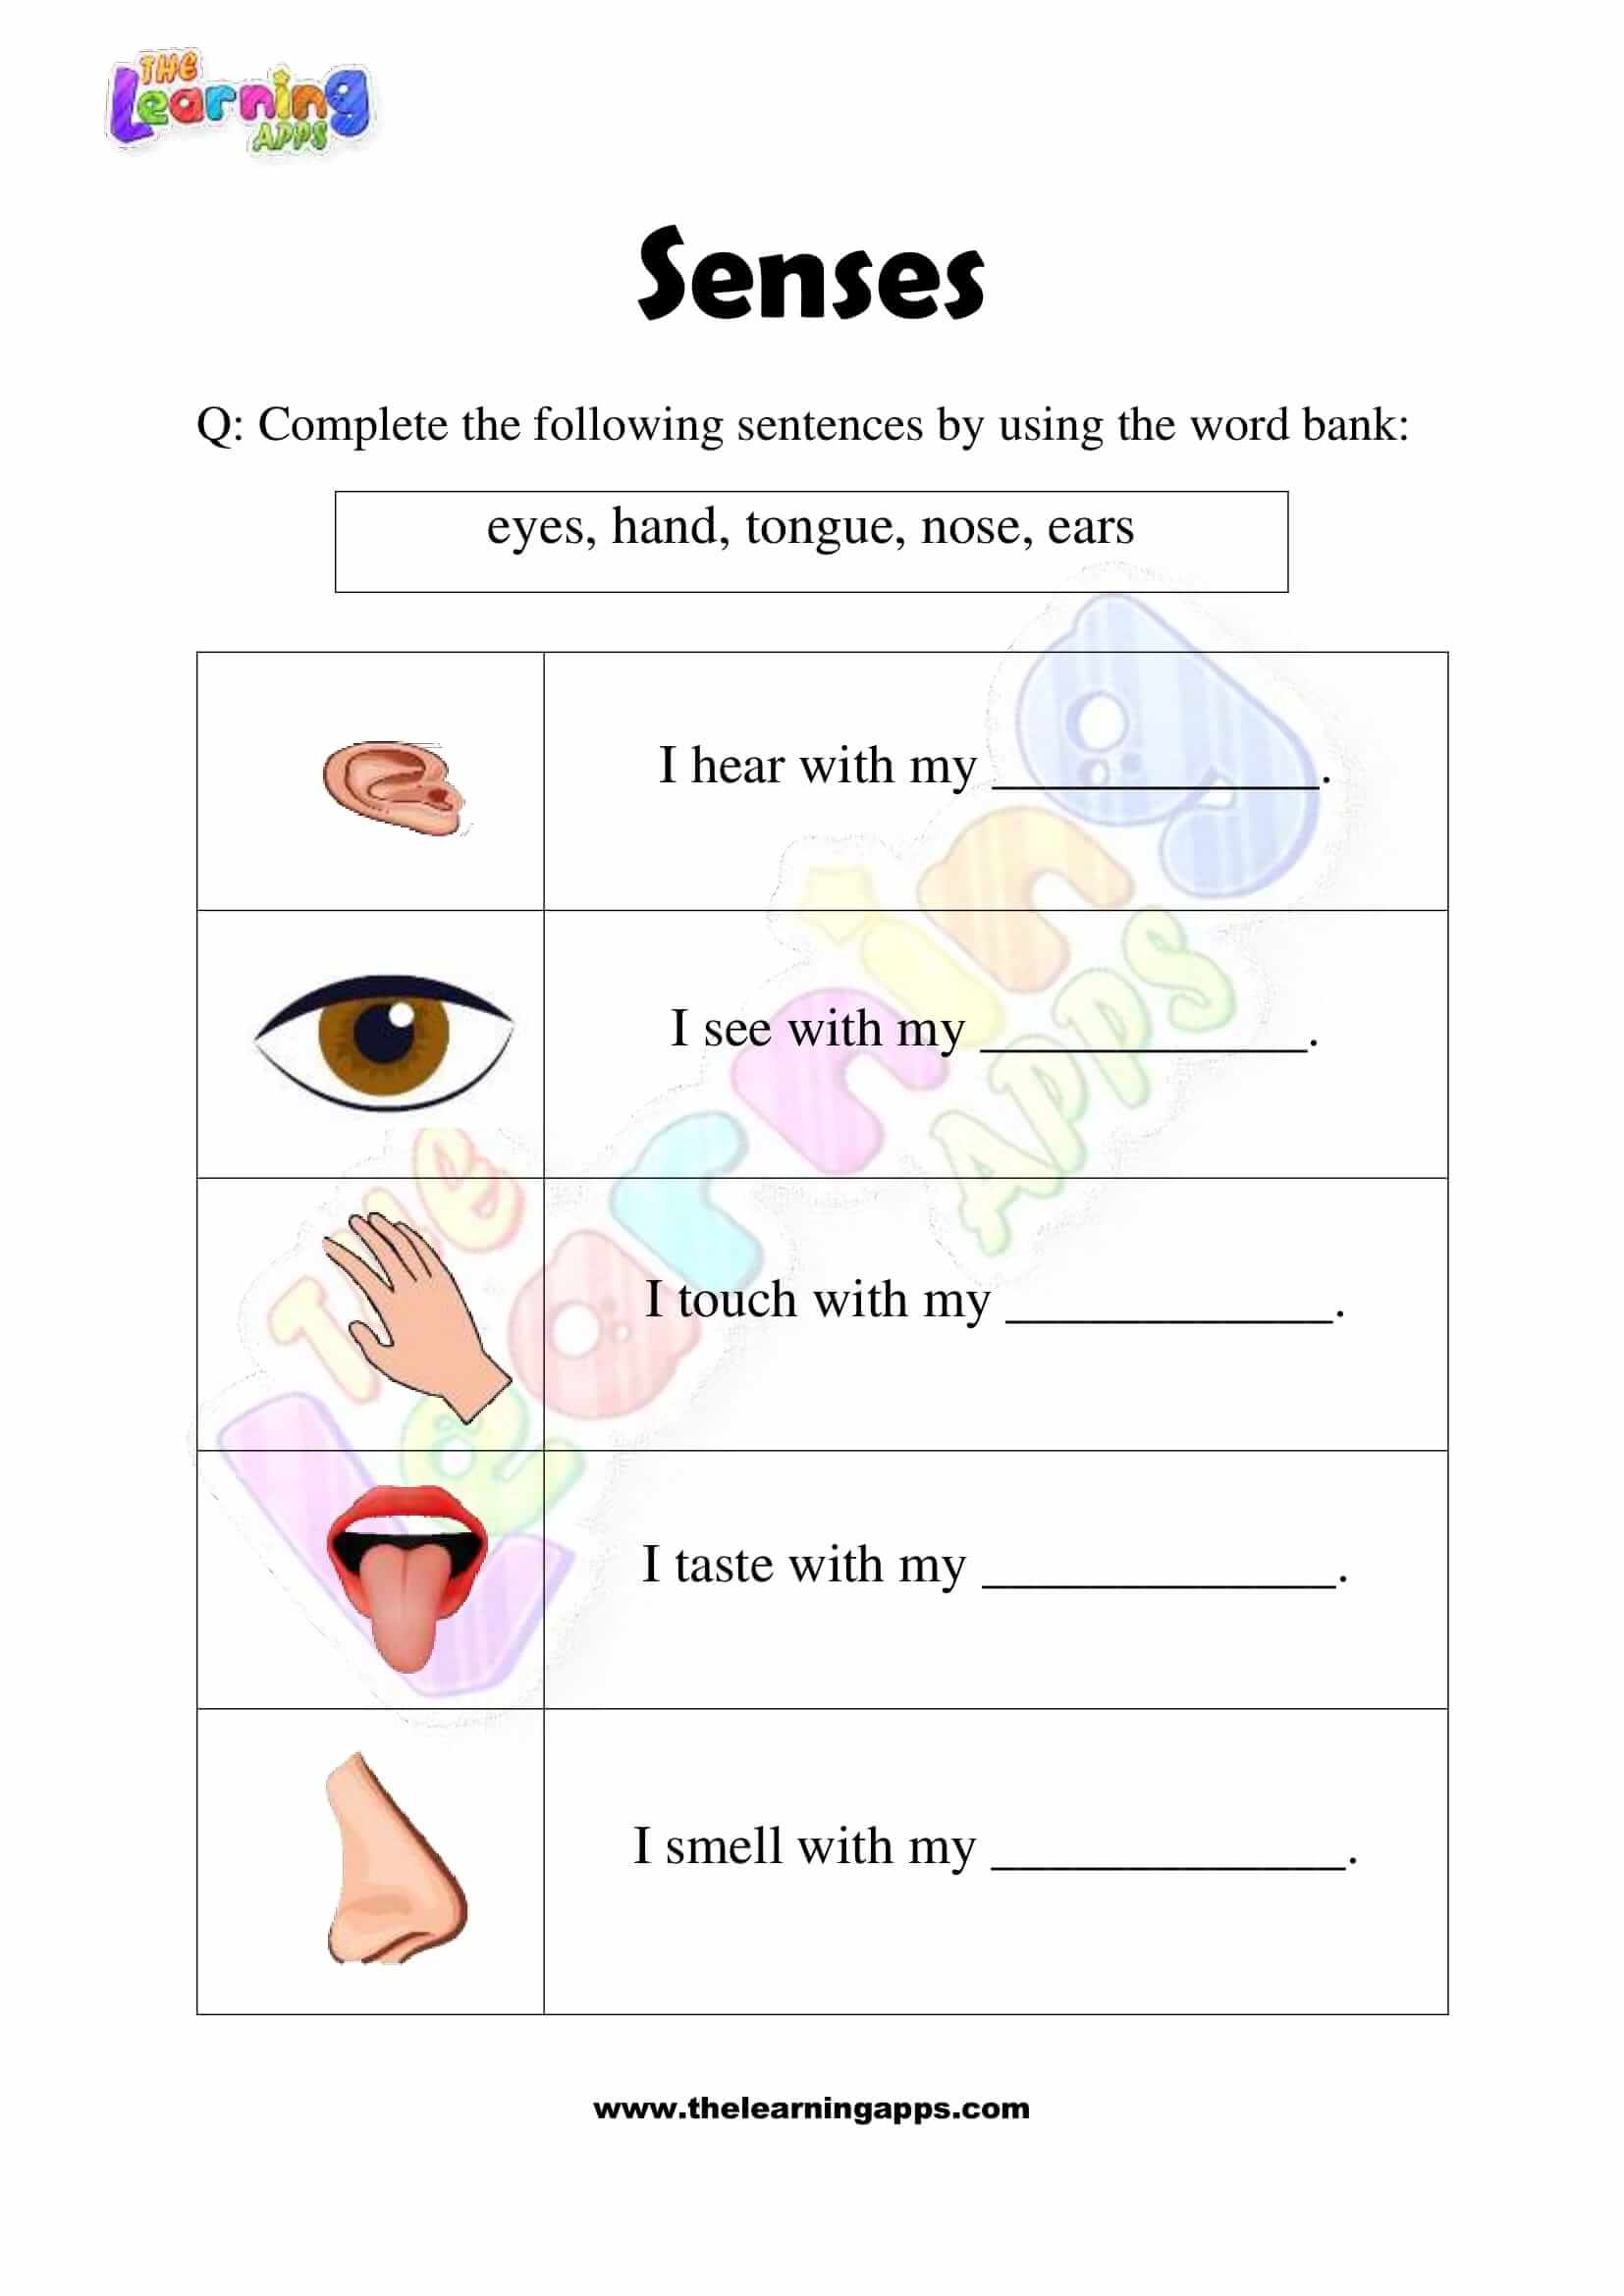 Senses Worksheet - Grade 2 - Activity 5